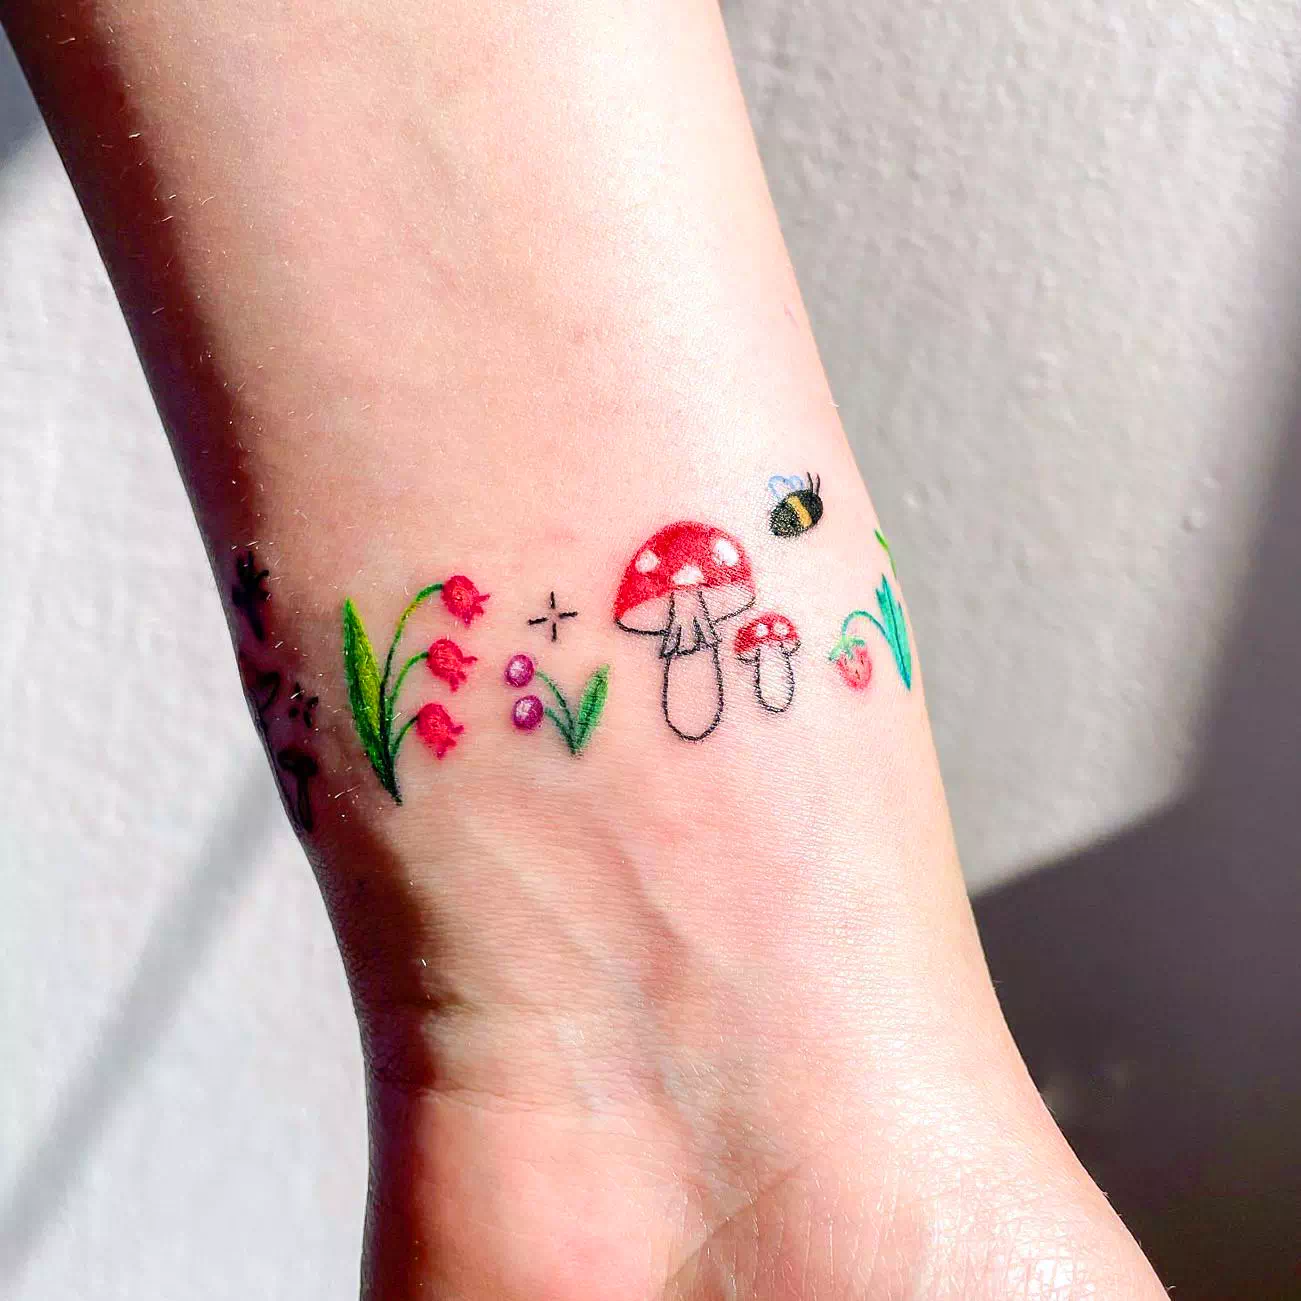 Bracelet Tattoo Ideas Nature Inspired